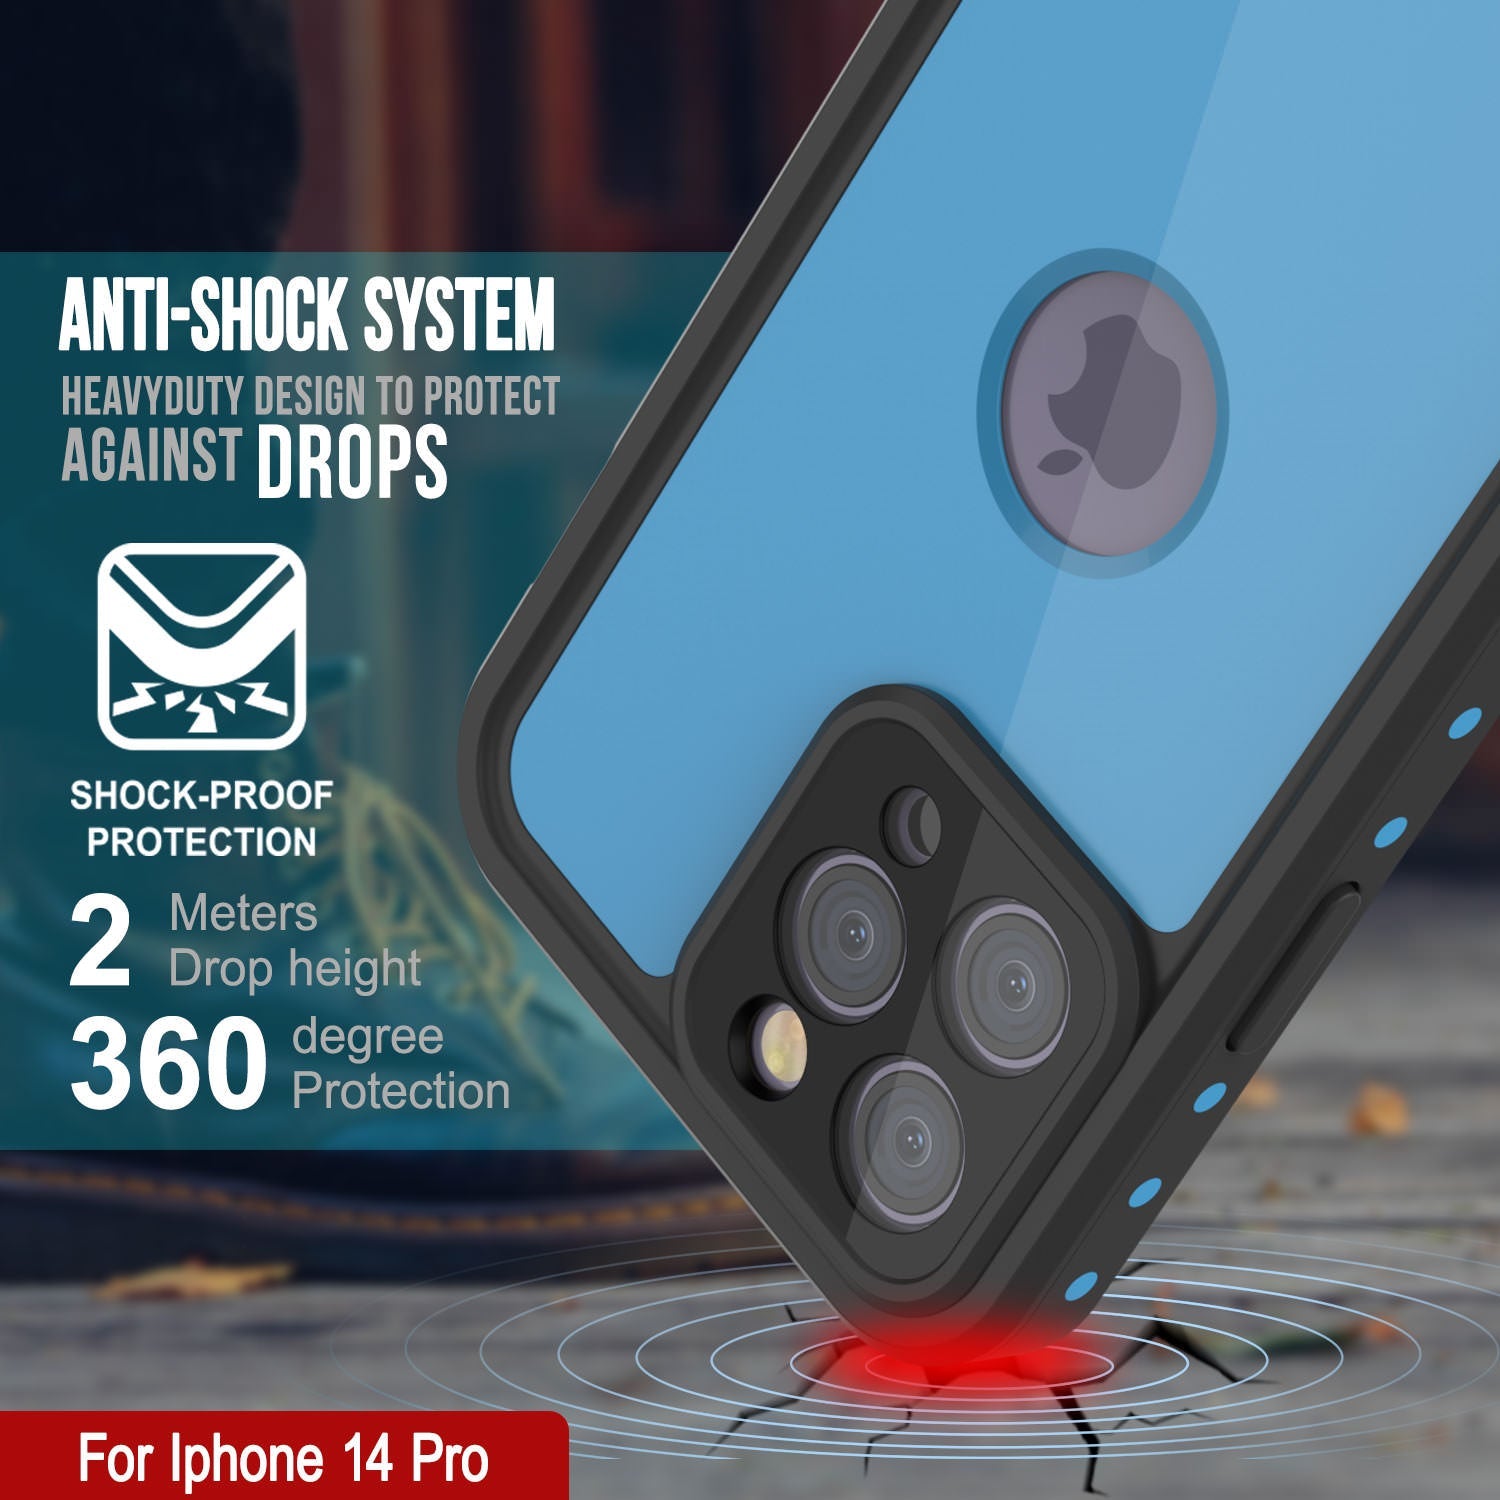 iPhone 14 Pro Waterproof IP68 Case, Punkcase [Light blue] [StudStar Series] [Slim Fit] [Dirtproof]